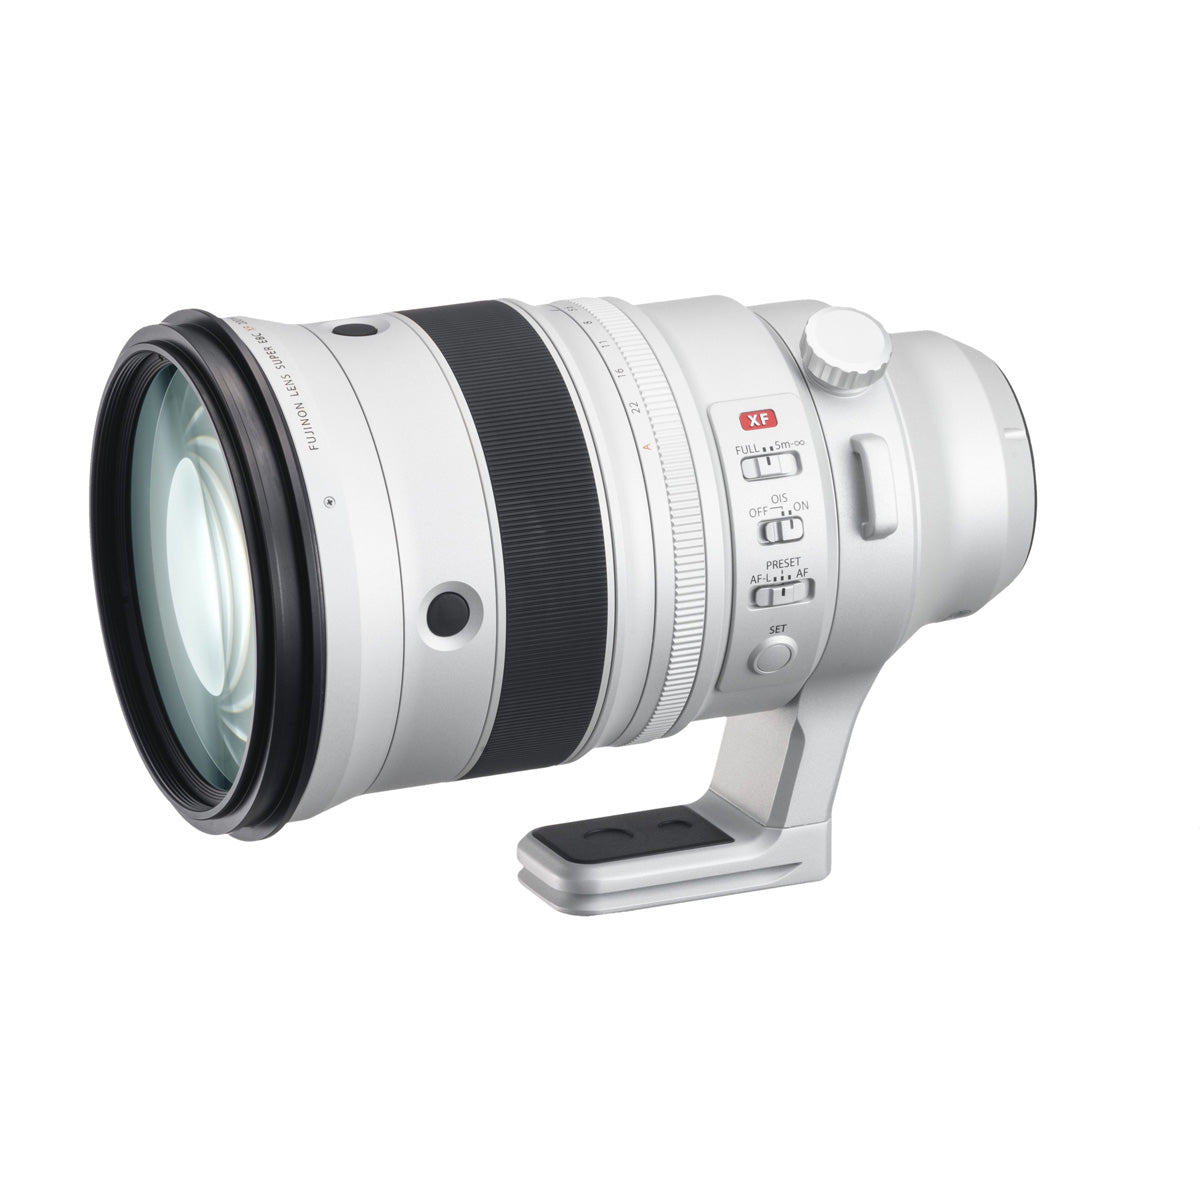 Fujifilm XF 200mm F2 R LM OIS WR Lens with XF 1.4x TC F2 Teleconverter